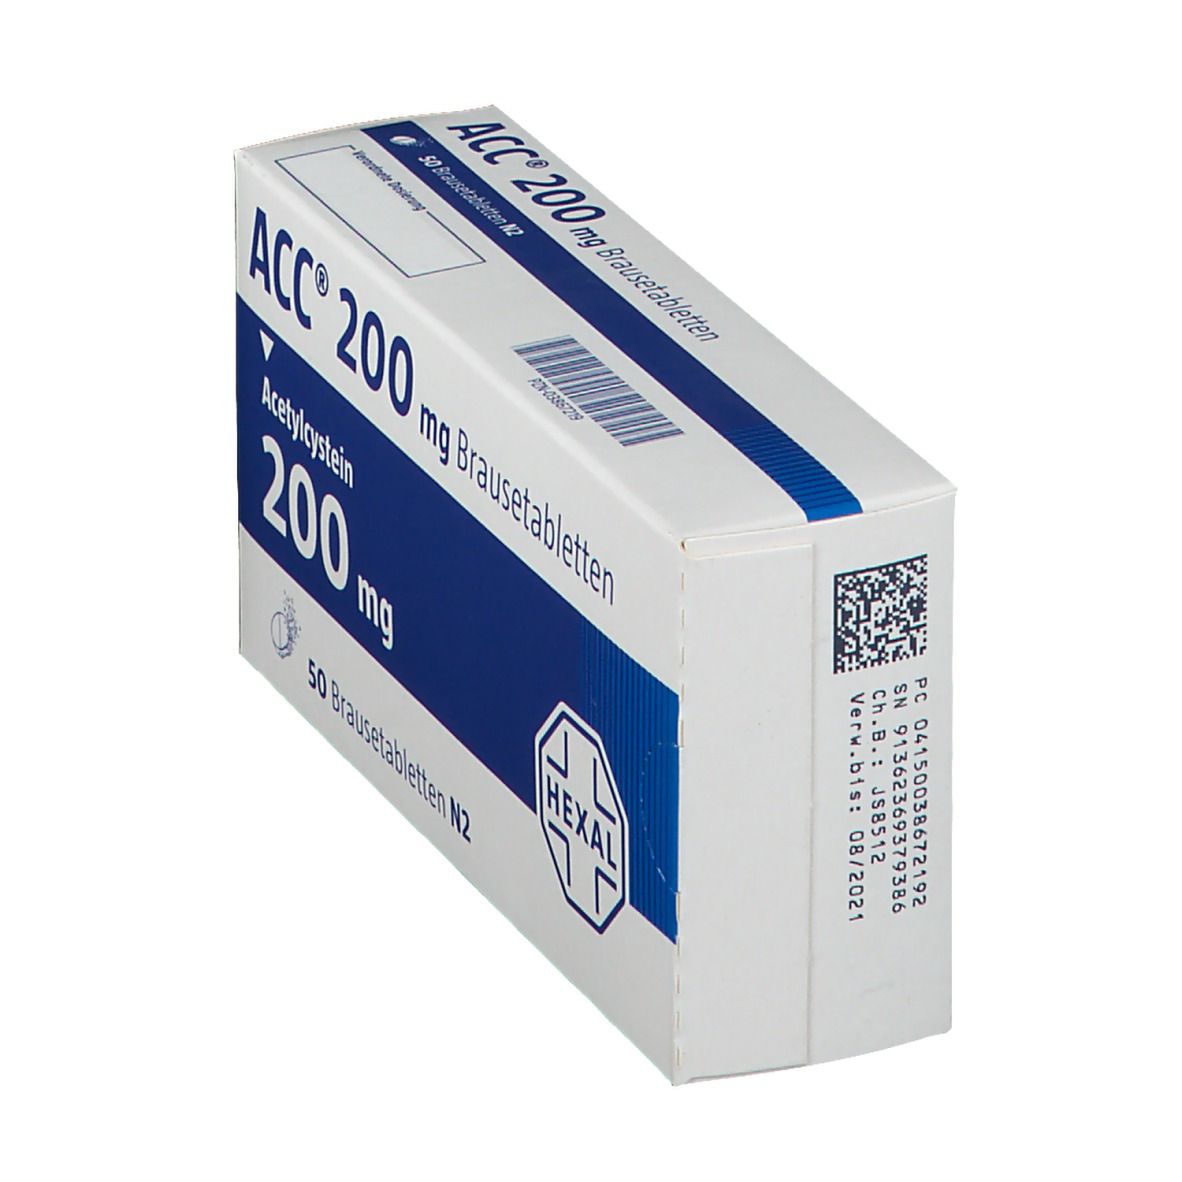 ACC® 200 mg